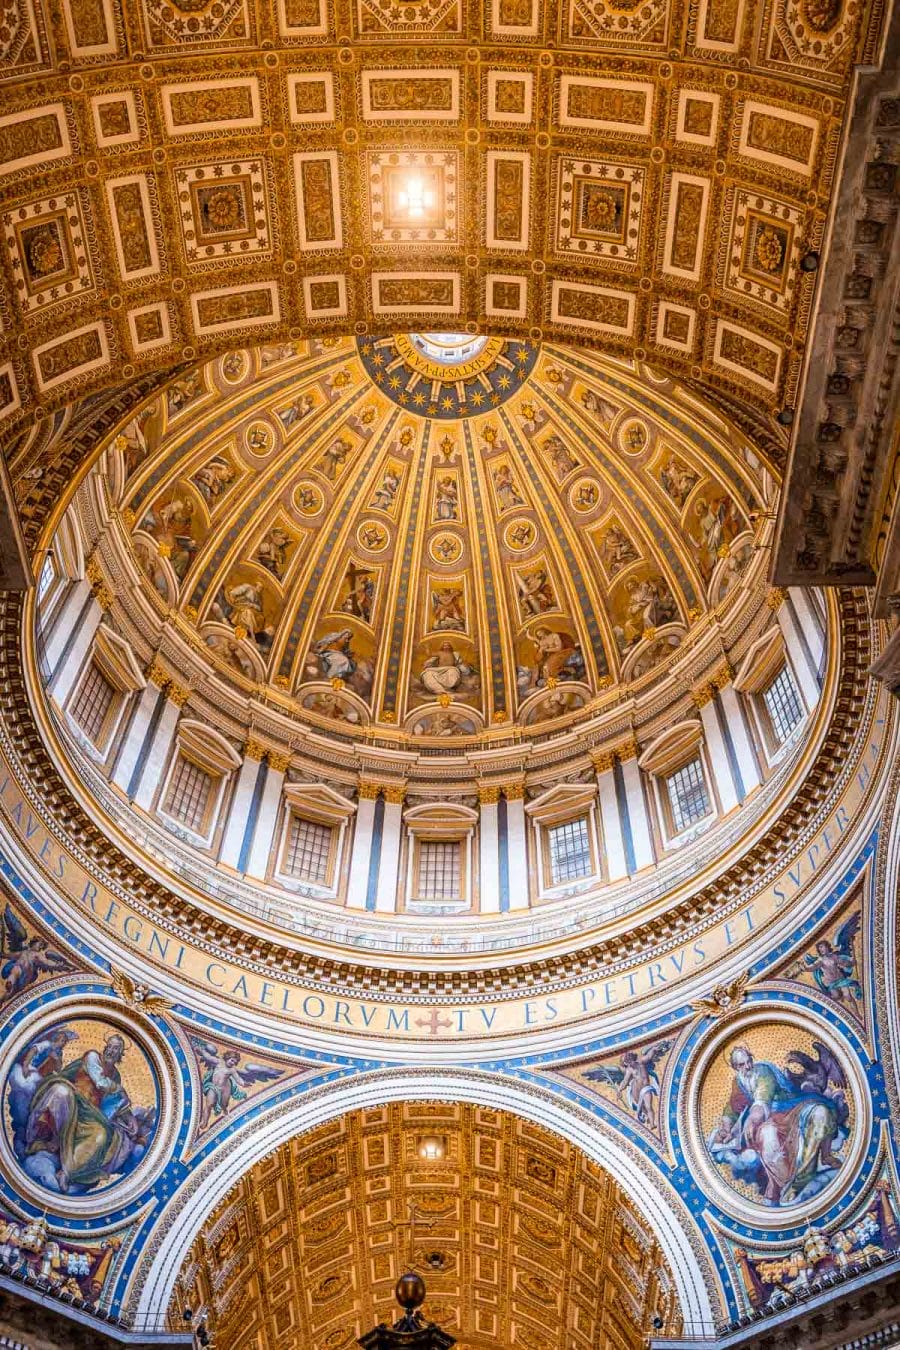 Interior of the St. Peter's Basilica, Vatican City